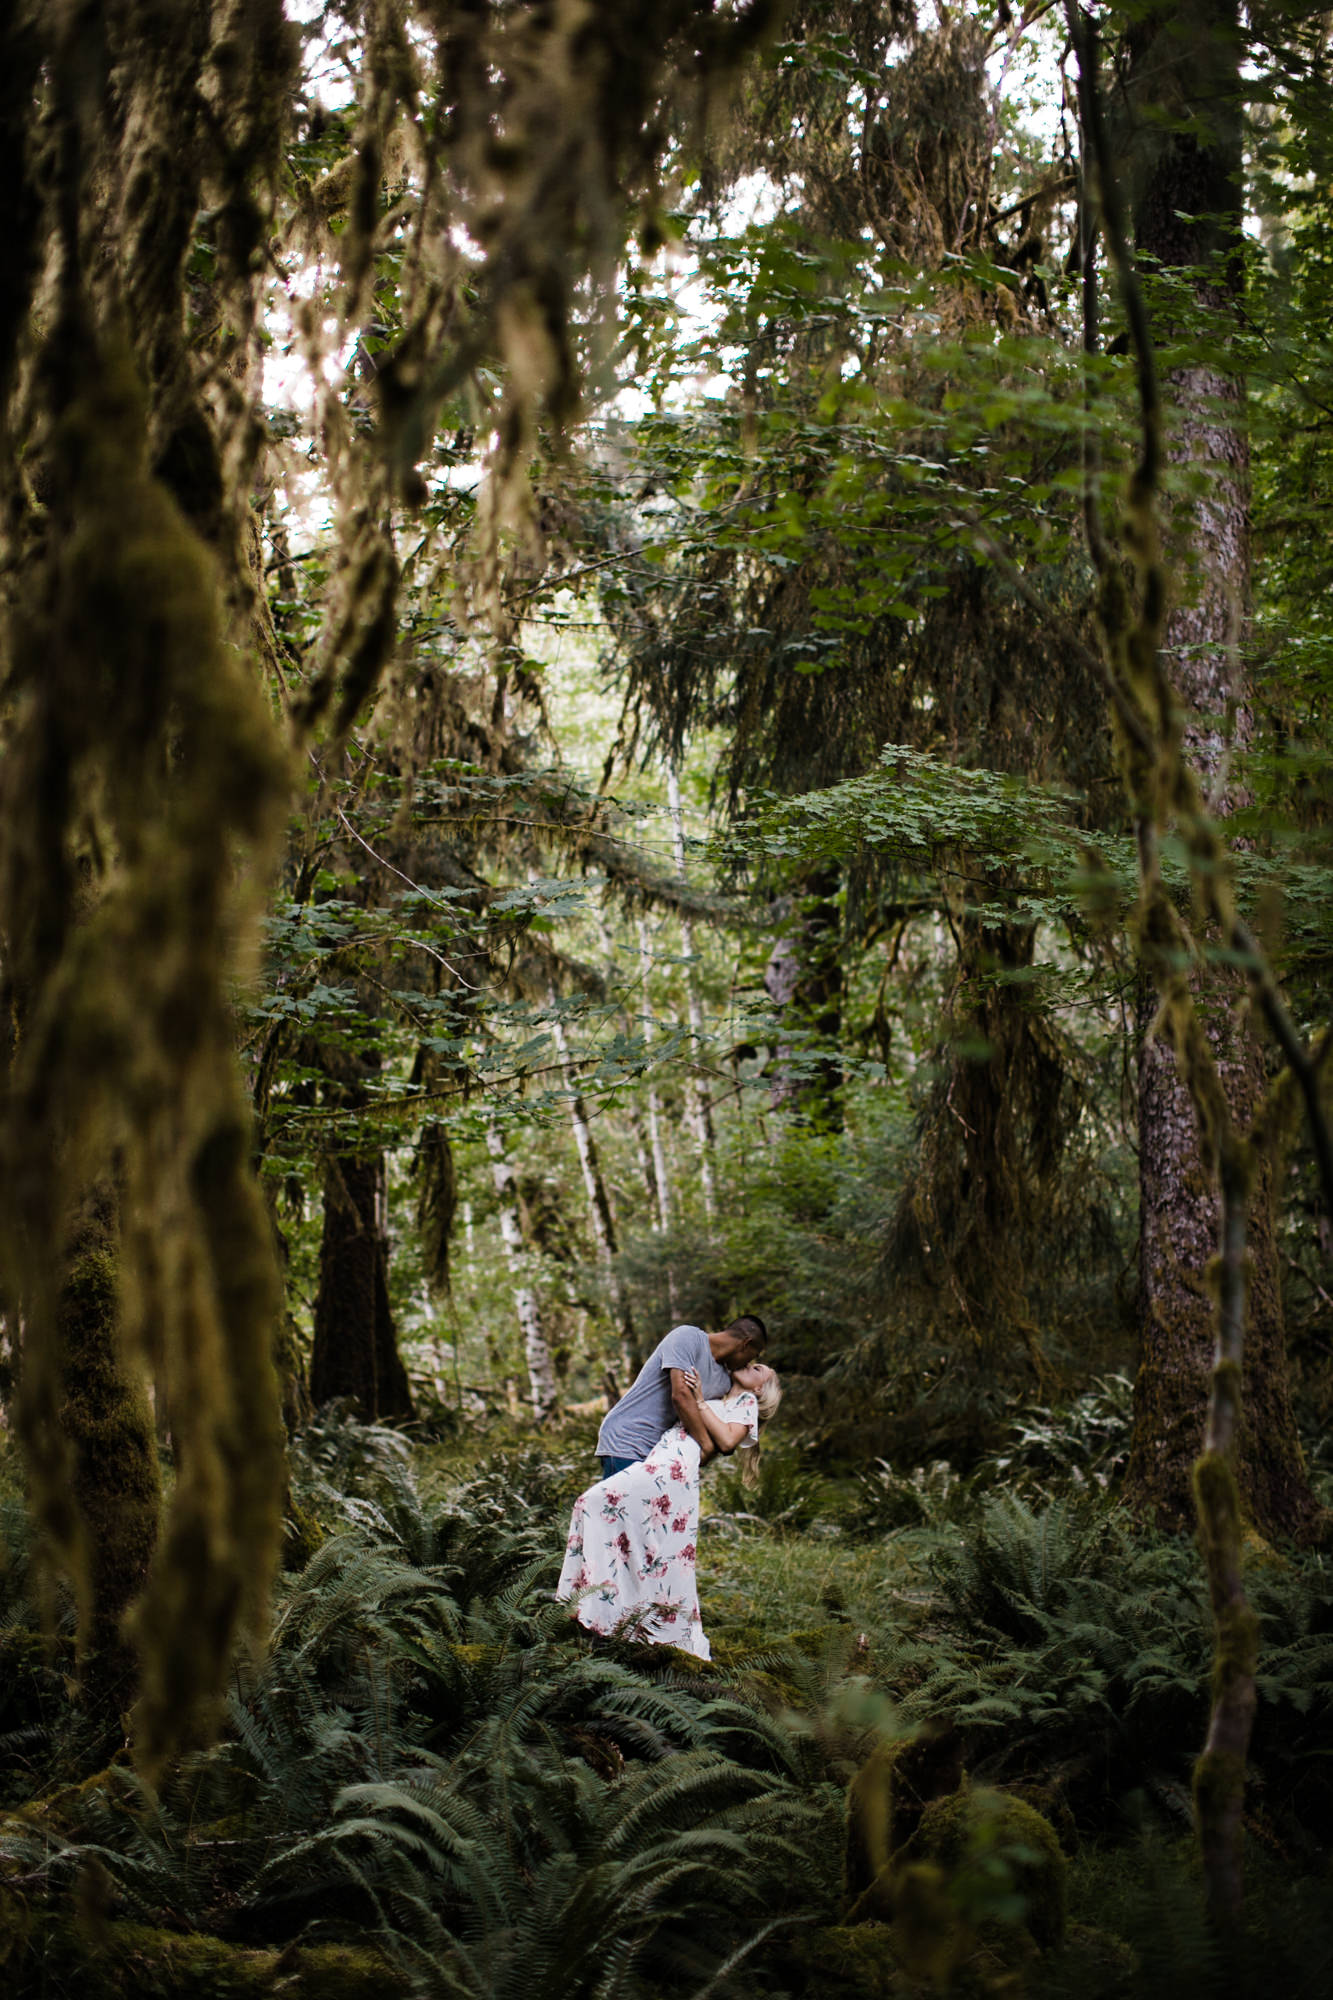 morgan + alex's engagement session in olympic national park | hoh rainforest campsite session | washington adventure wedding photographer